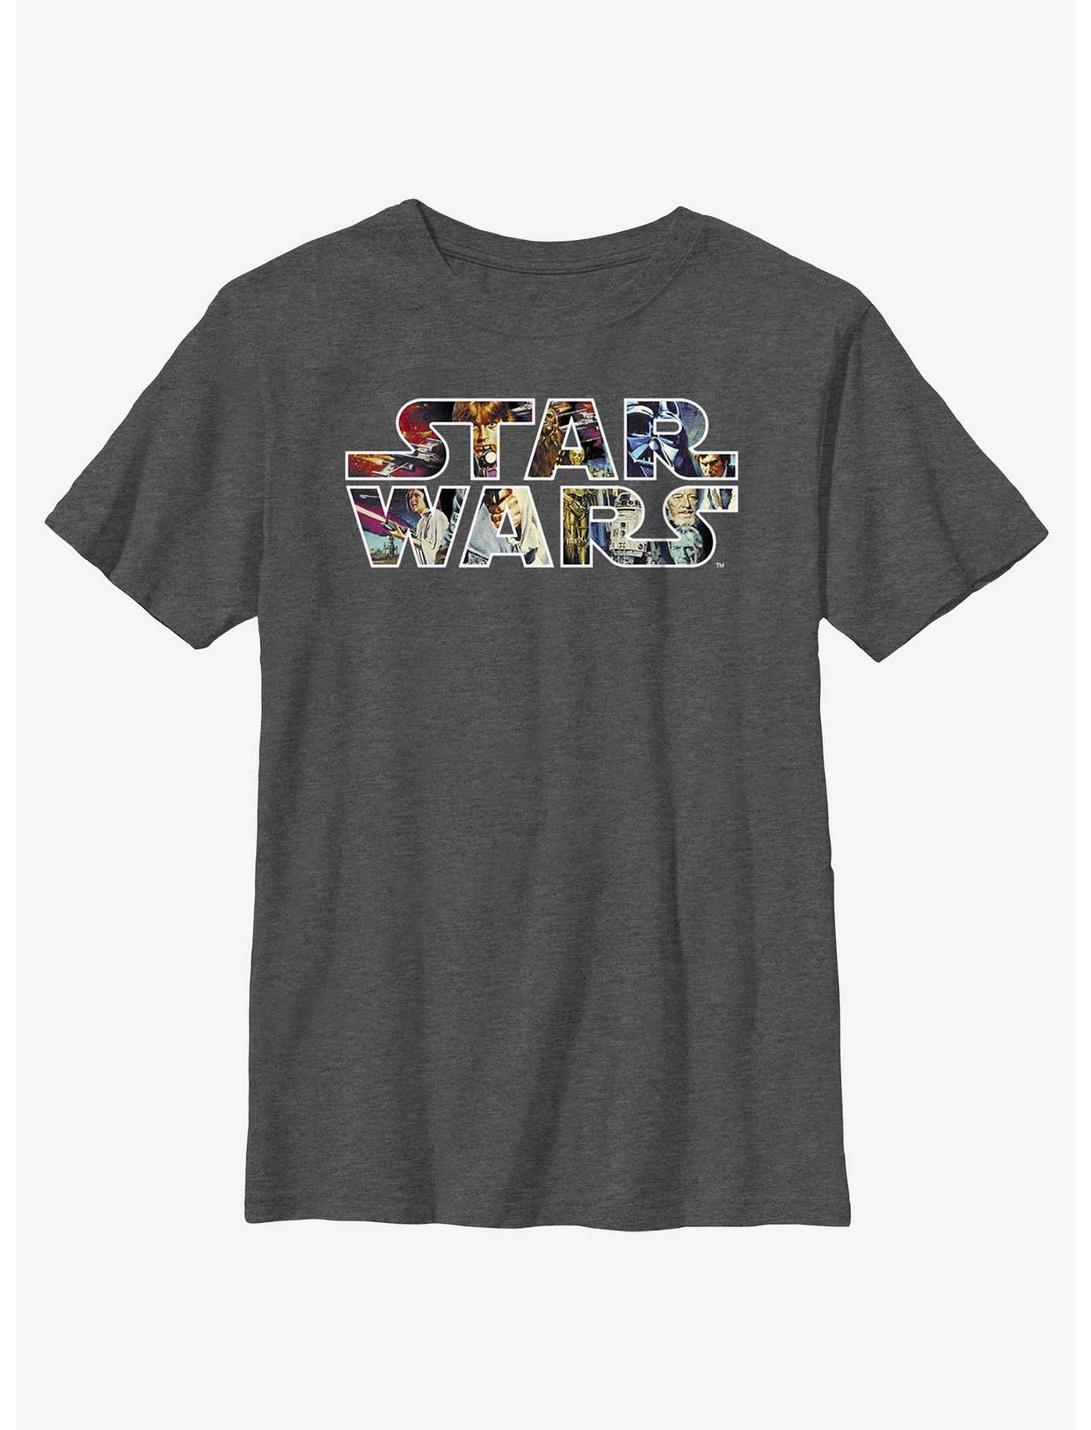 Plus Size Star Wars Epic Collage Logo Youth T-Shirt, CHAR HTR, hi-res